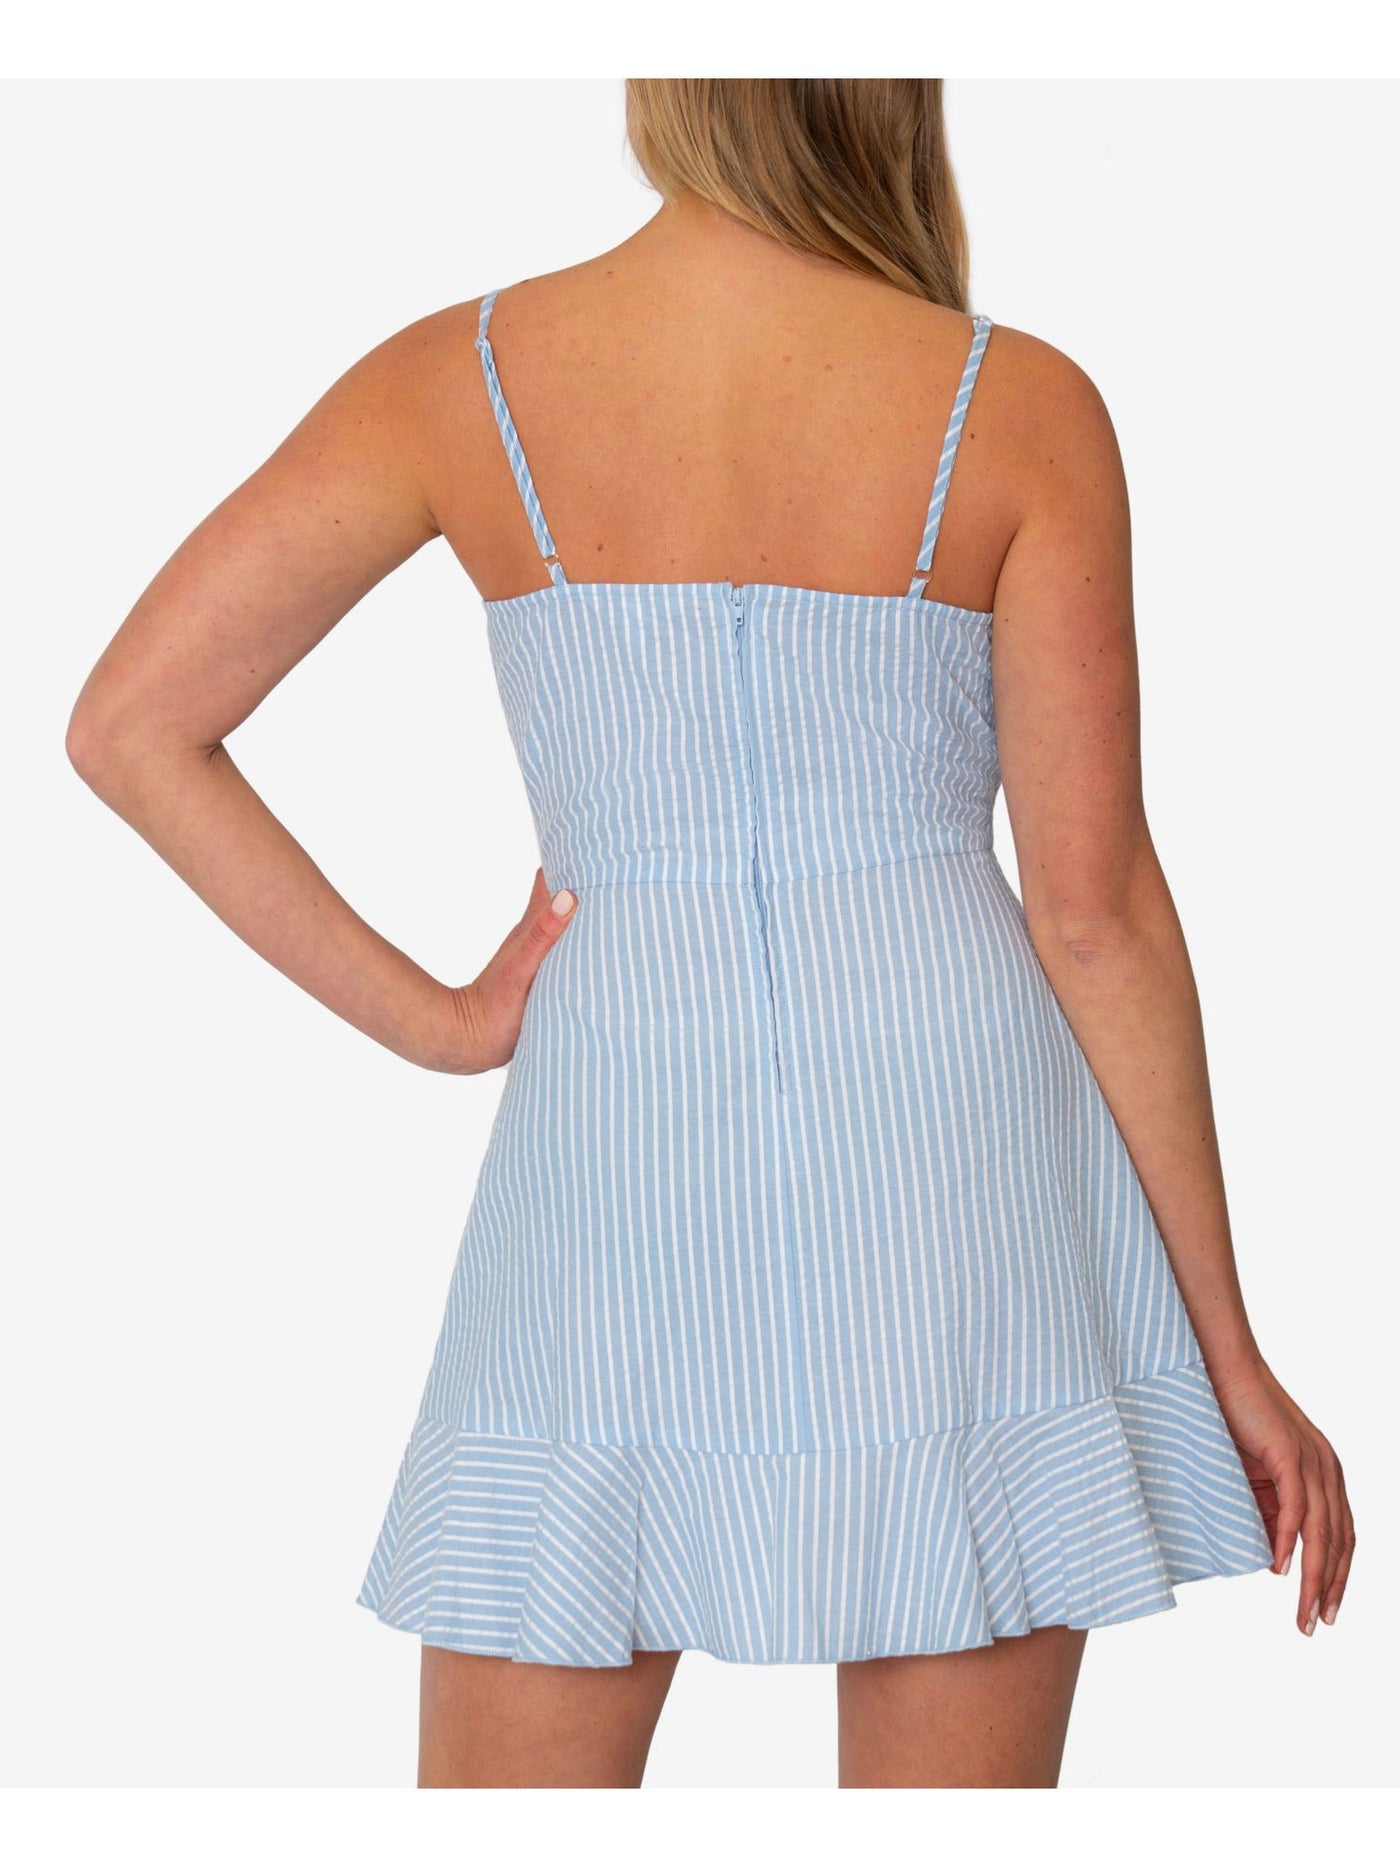 SPEECHLESS Womens Blue Ruffled Textured Zippered Striped Spaghetti Strap Surplice Neckline Mini Sheath Dress Juniors XL